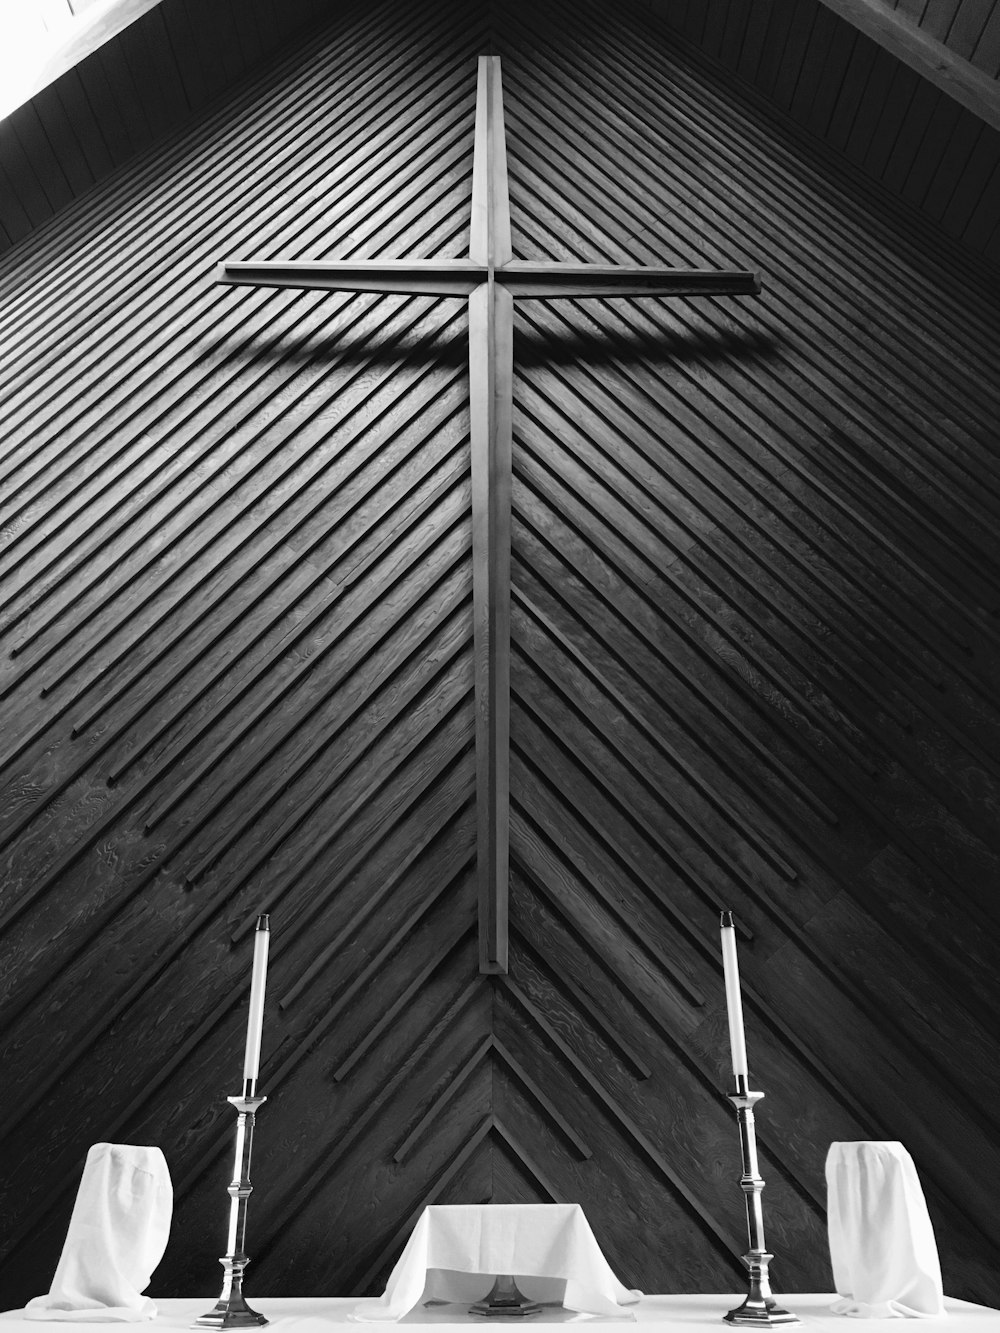 Church altar with black cross on wall